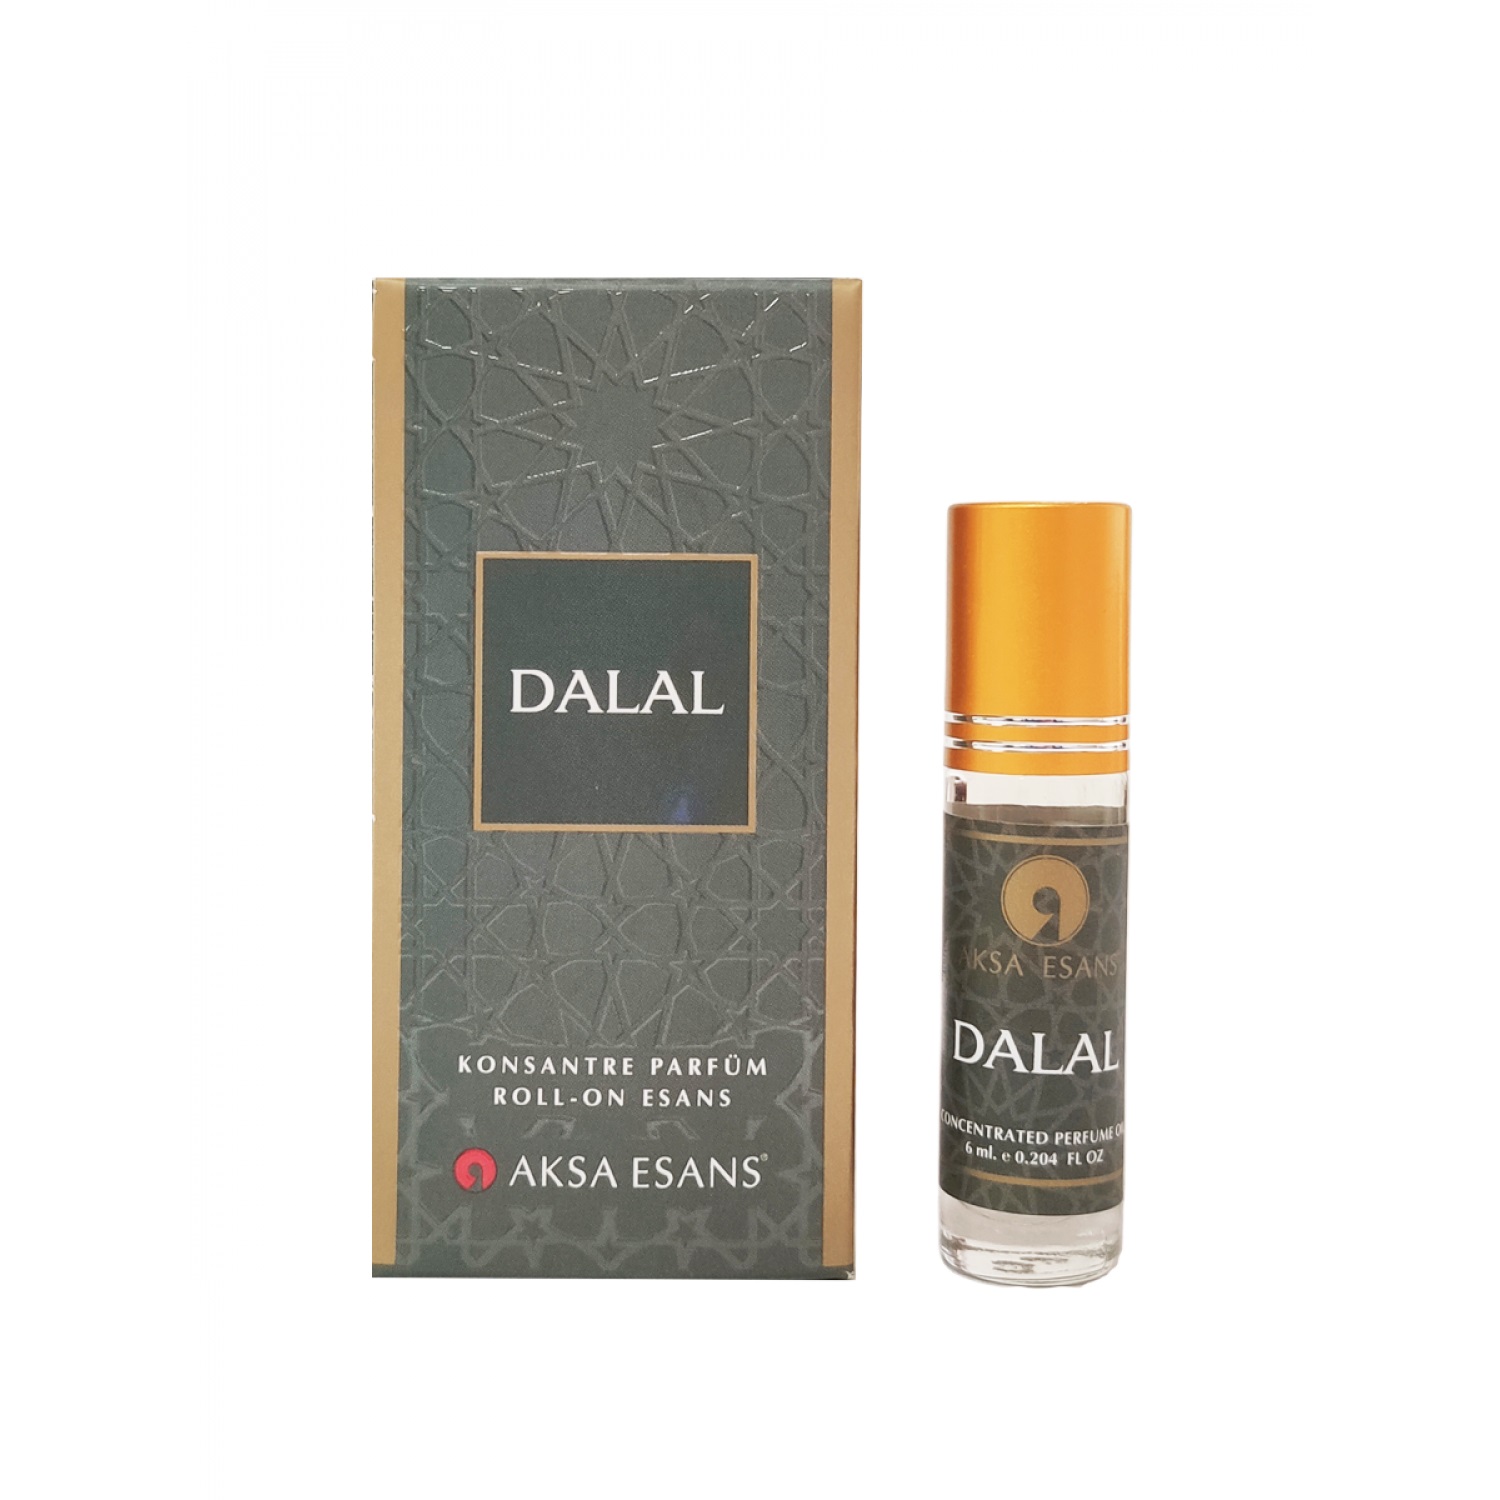 DALAL Concentrated Perfume Oil, Aksa Esans (ДАЛАЛ турецкие роликовые масляные духи, Акса Эсанс), 6 мл.